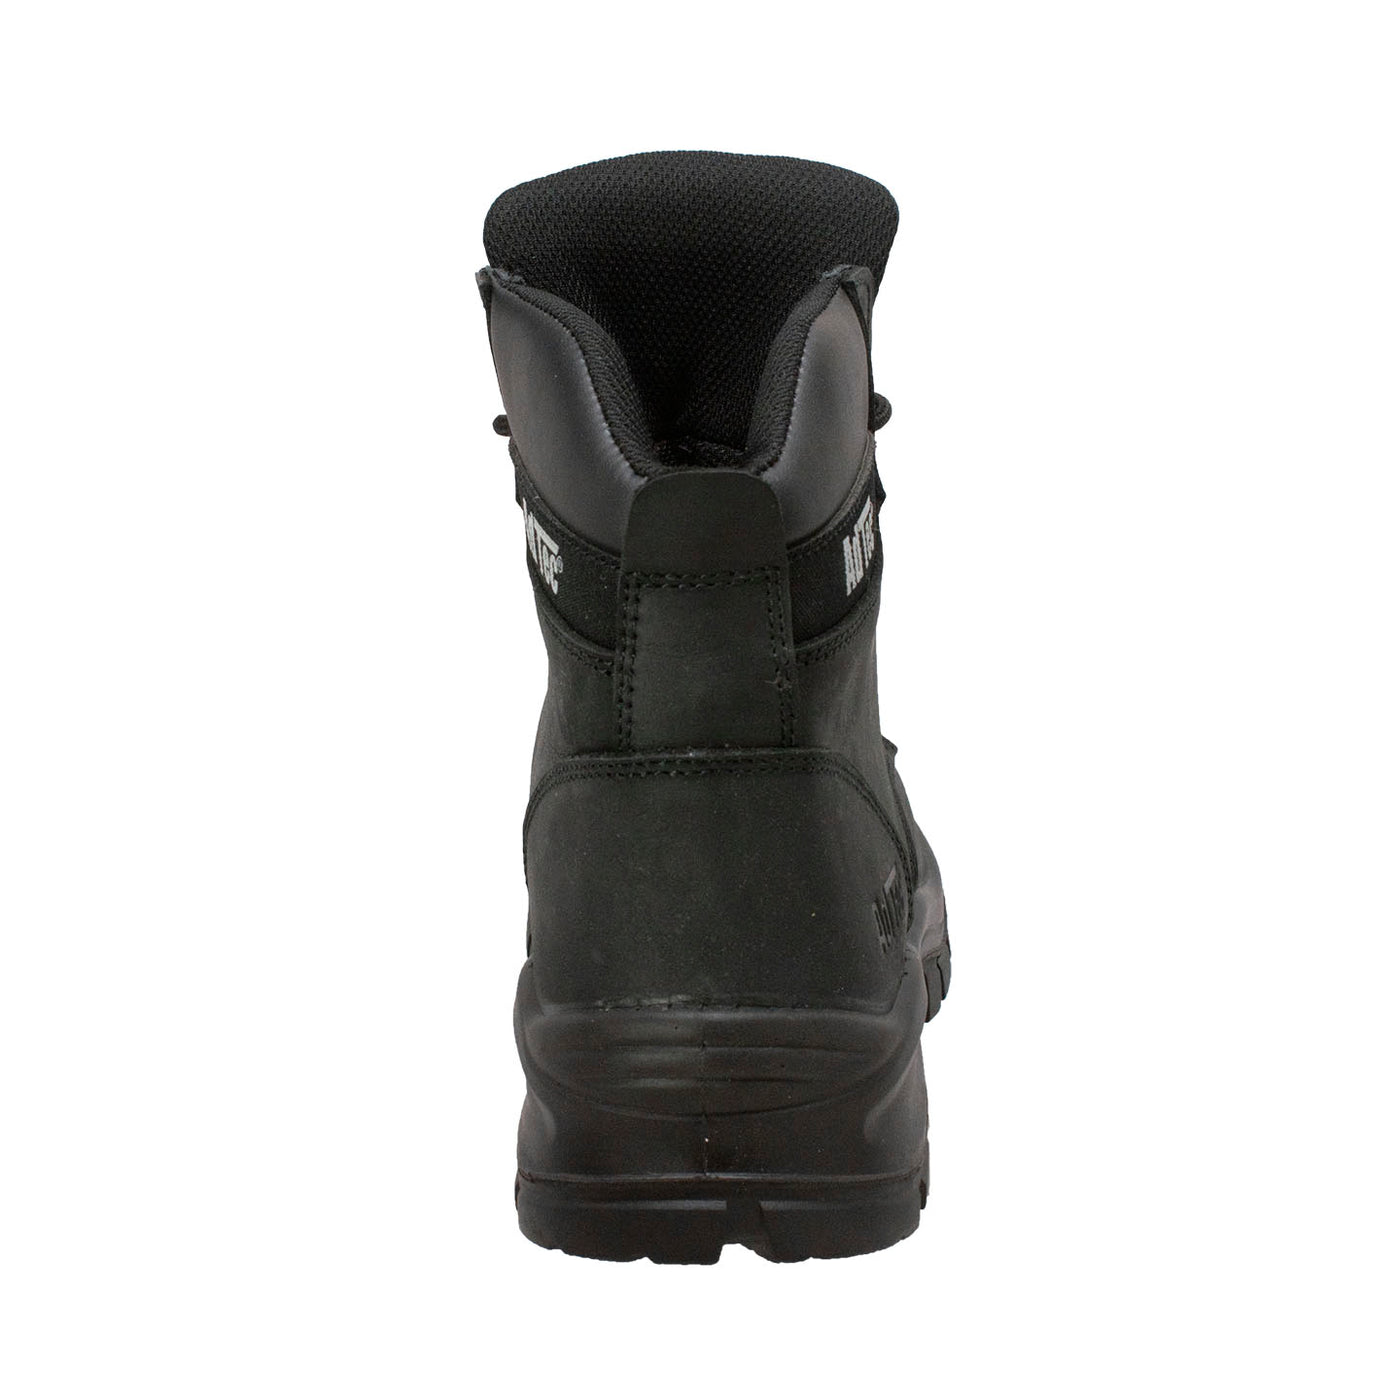 Men 6" Black Waterproof Composite Toe Work Boot - 9900-BK - Shop Genuine Leather men & women's boots online | AdTecFootWear